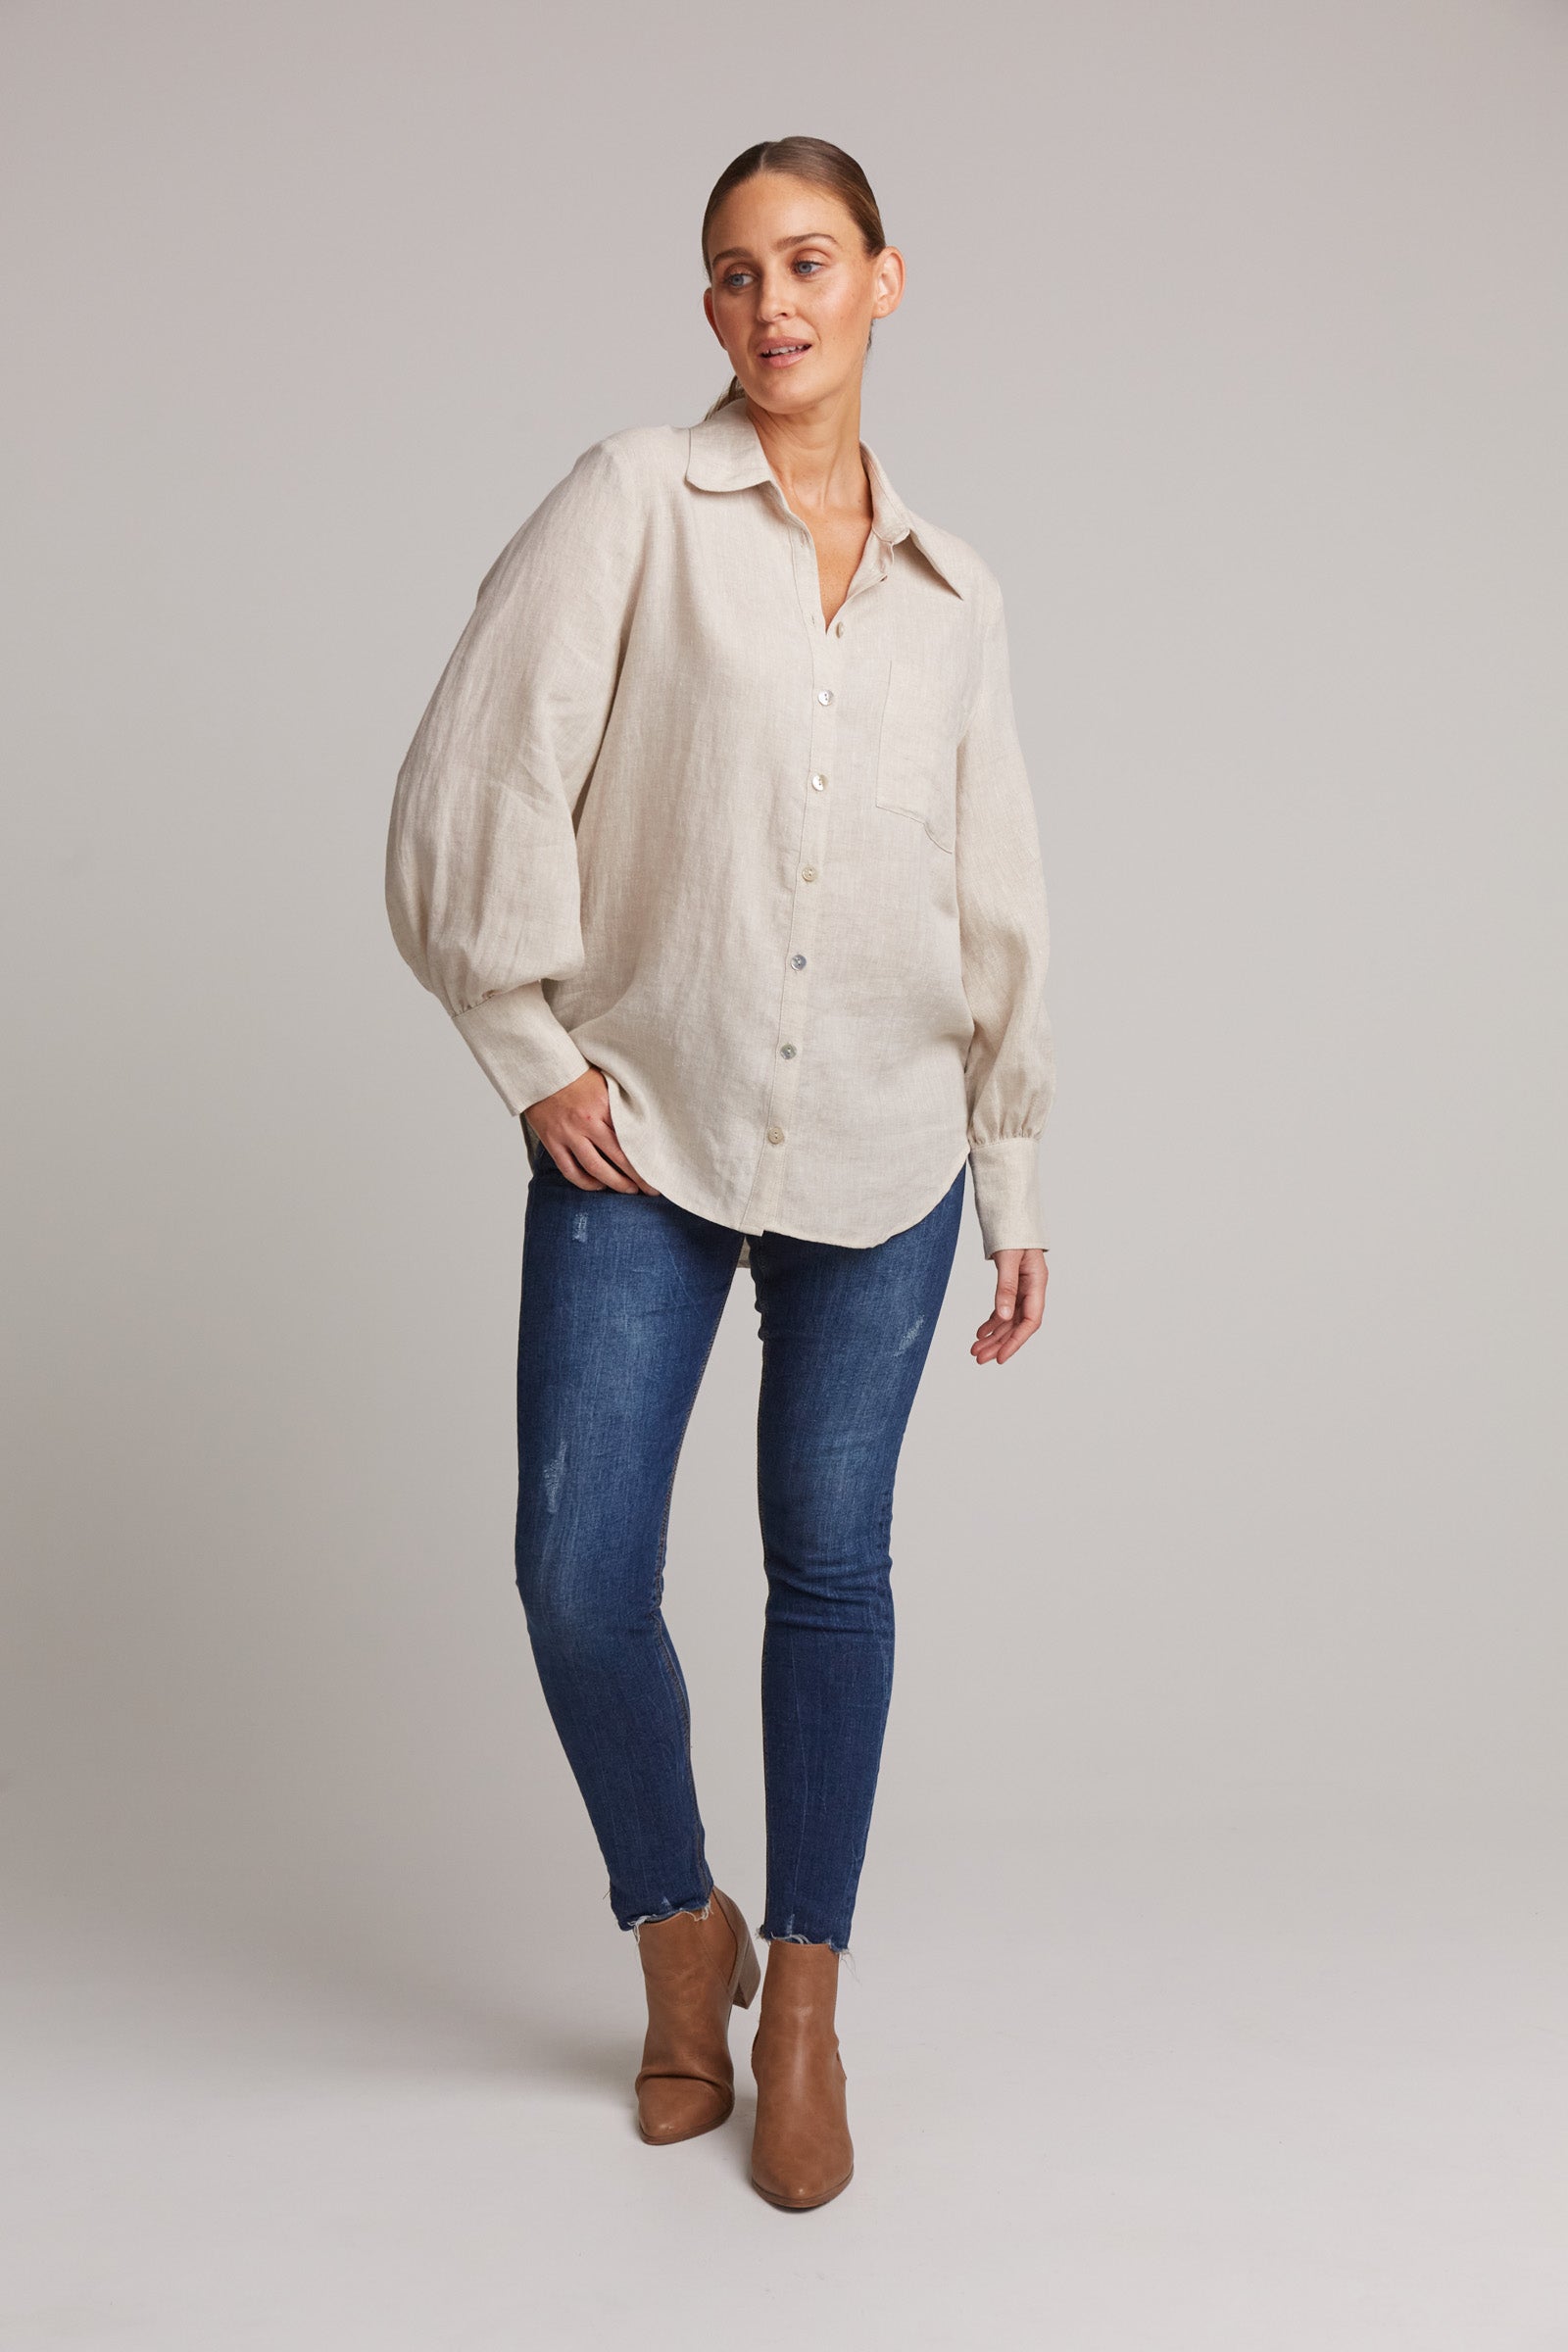 Studio Shirt - Tusk - eb&ive Clothing - Shirt L/S Linen